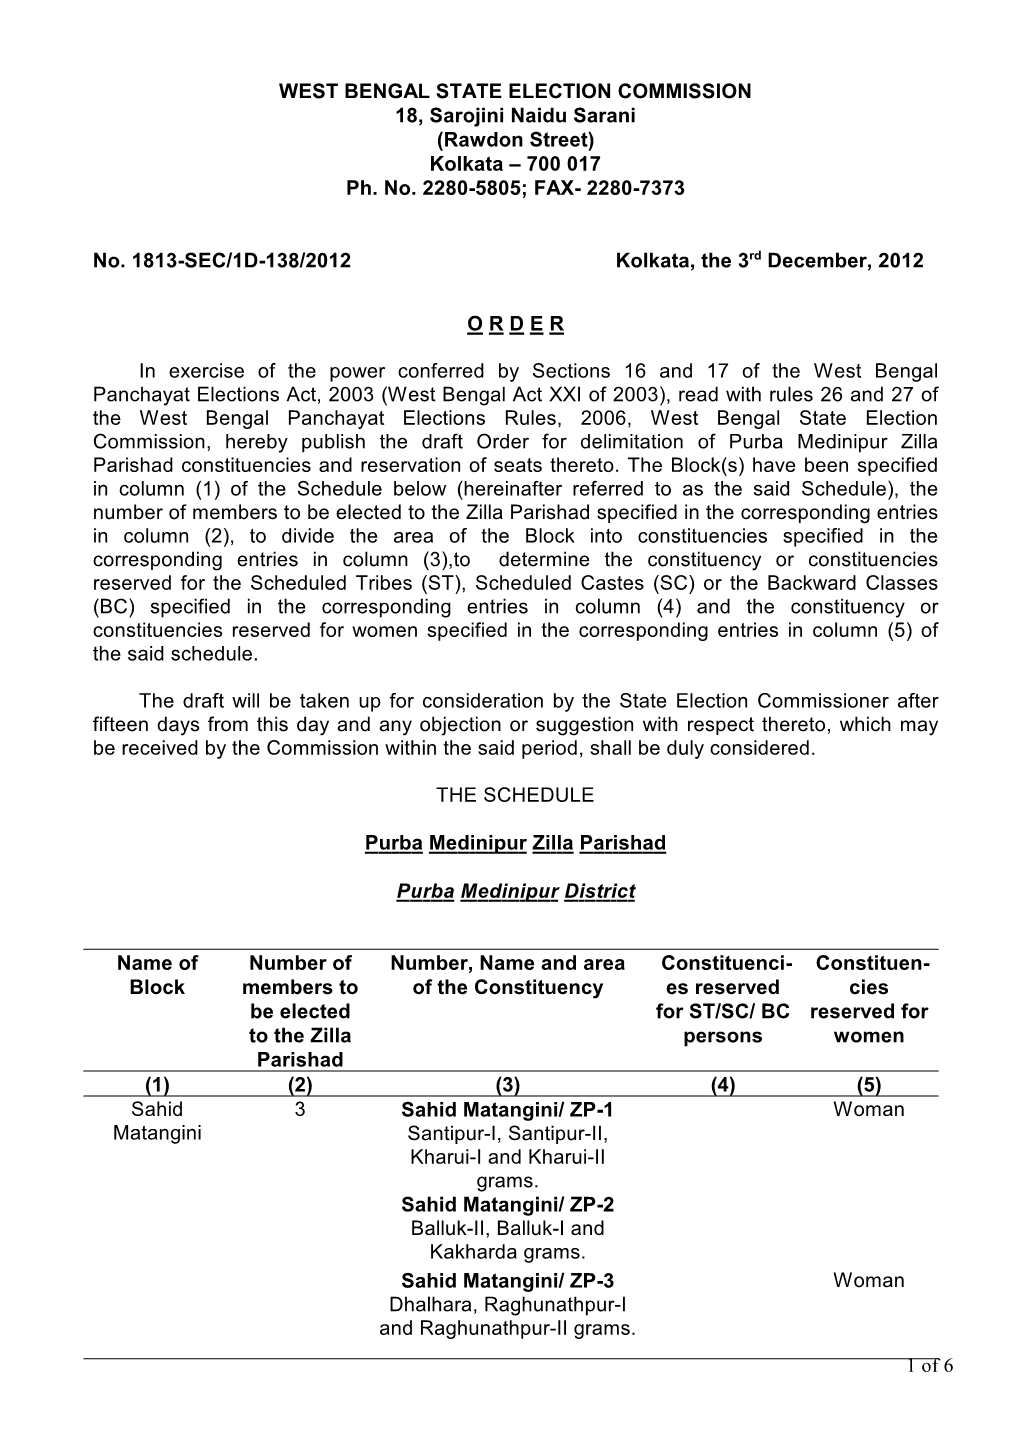 WEST BENGAL STATE ELECTION COMMISSION 18, Sarojini Naidu Sarani (Rawdon Street) Kolkata – 700 017 Ph. No. 2280-5805; FAX